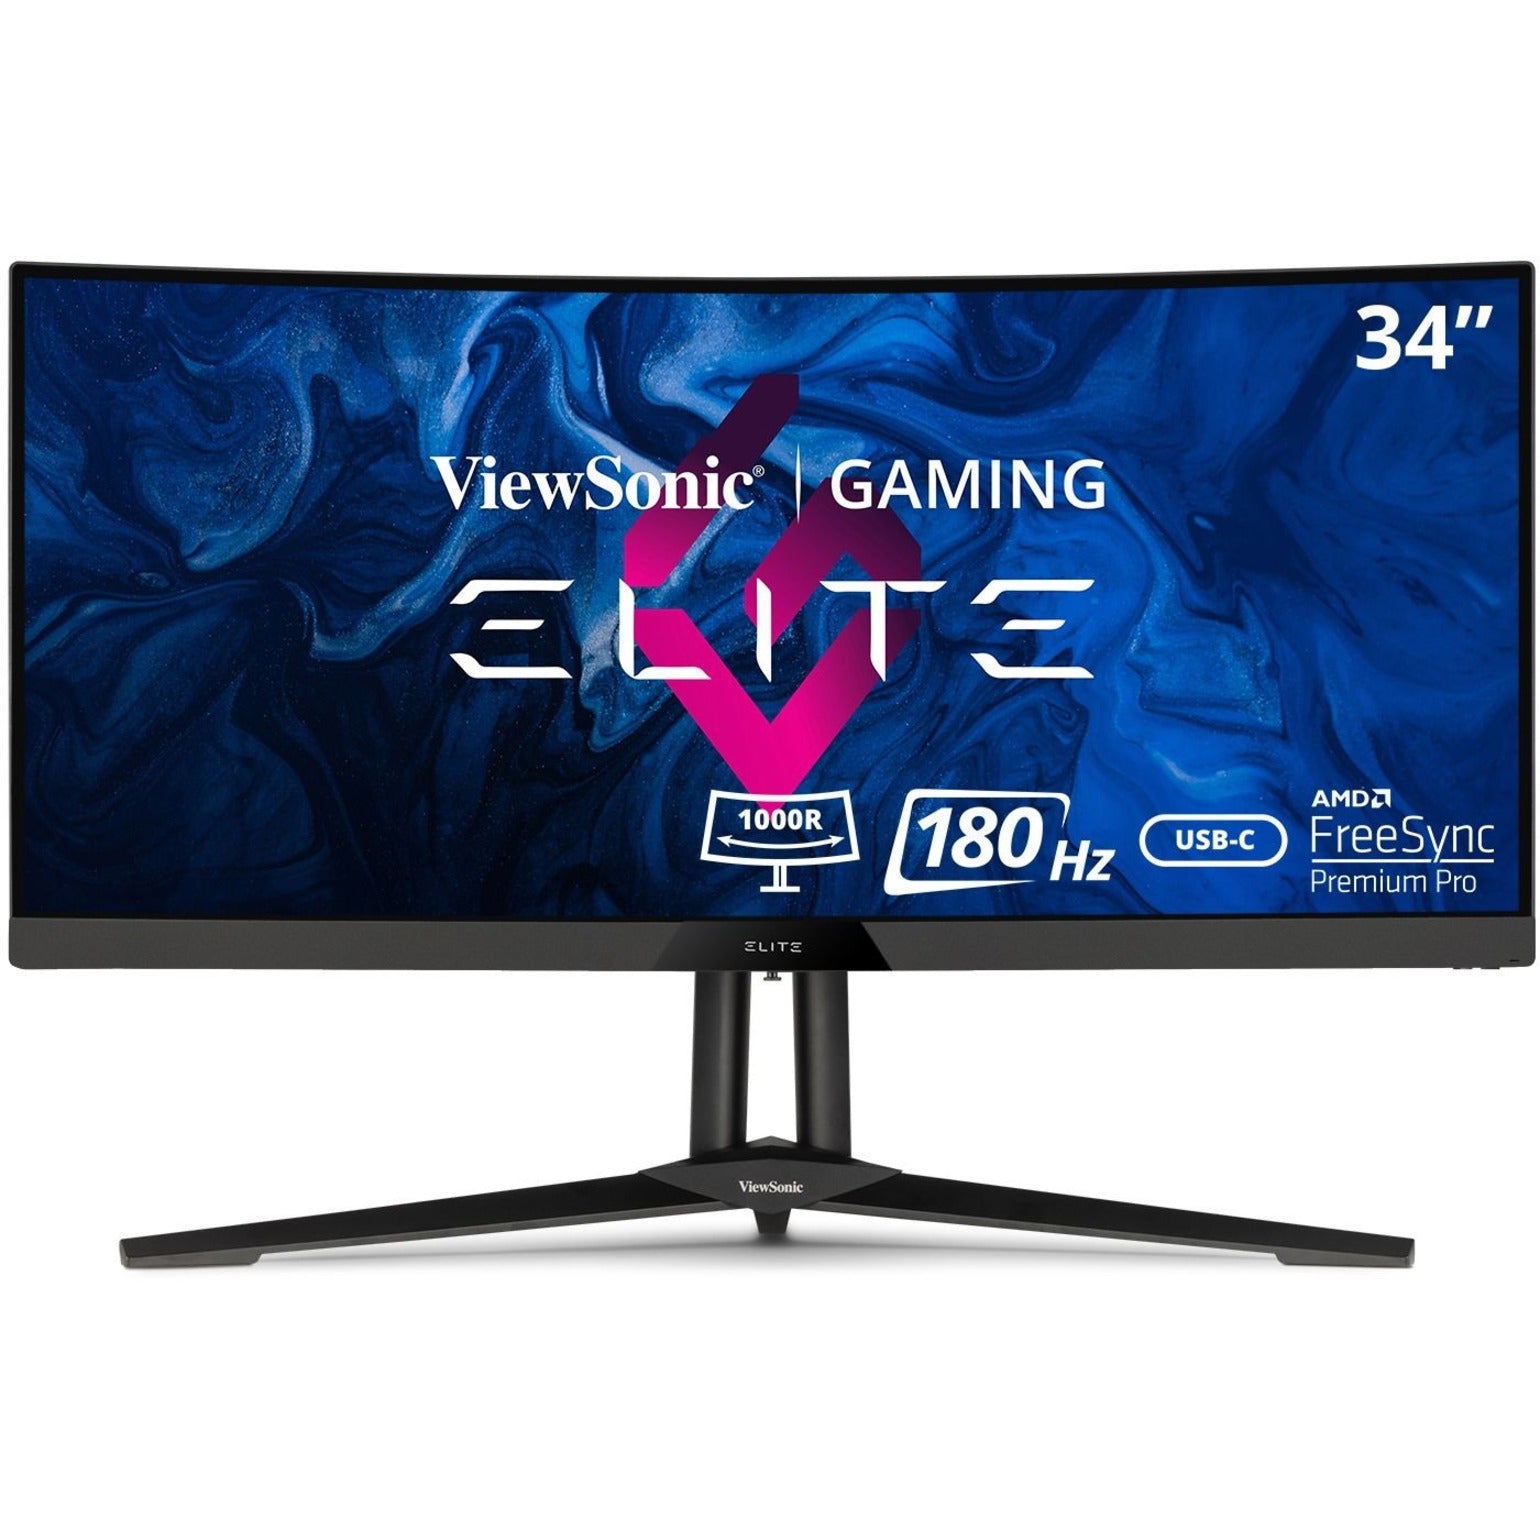 ViewSonic XG340C-2K Gaming Monitor 34 Curved 1440p 1ms 180Hz, USB-C,  Speakers, FreeSync Premium Pro